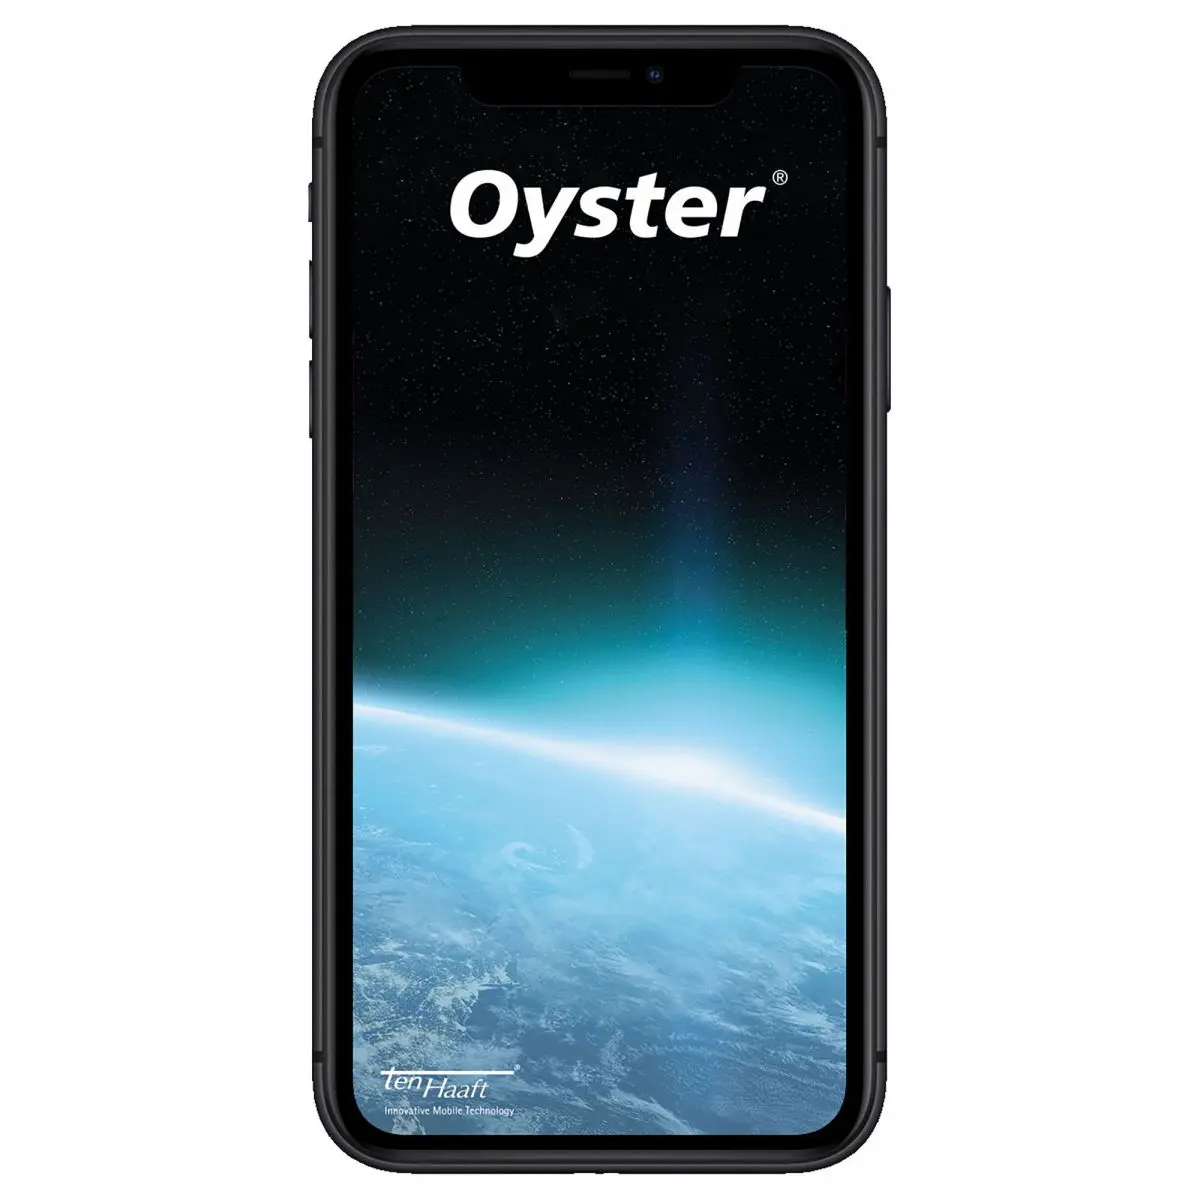 Satelitný systém Oyster 65 Premium Base Single Skew